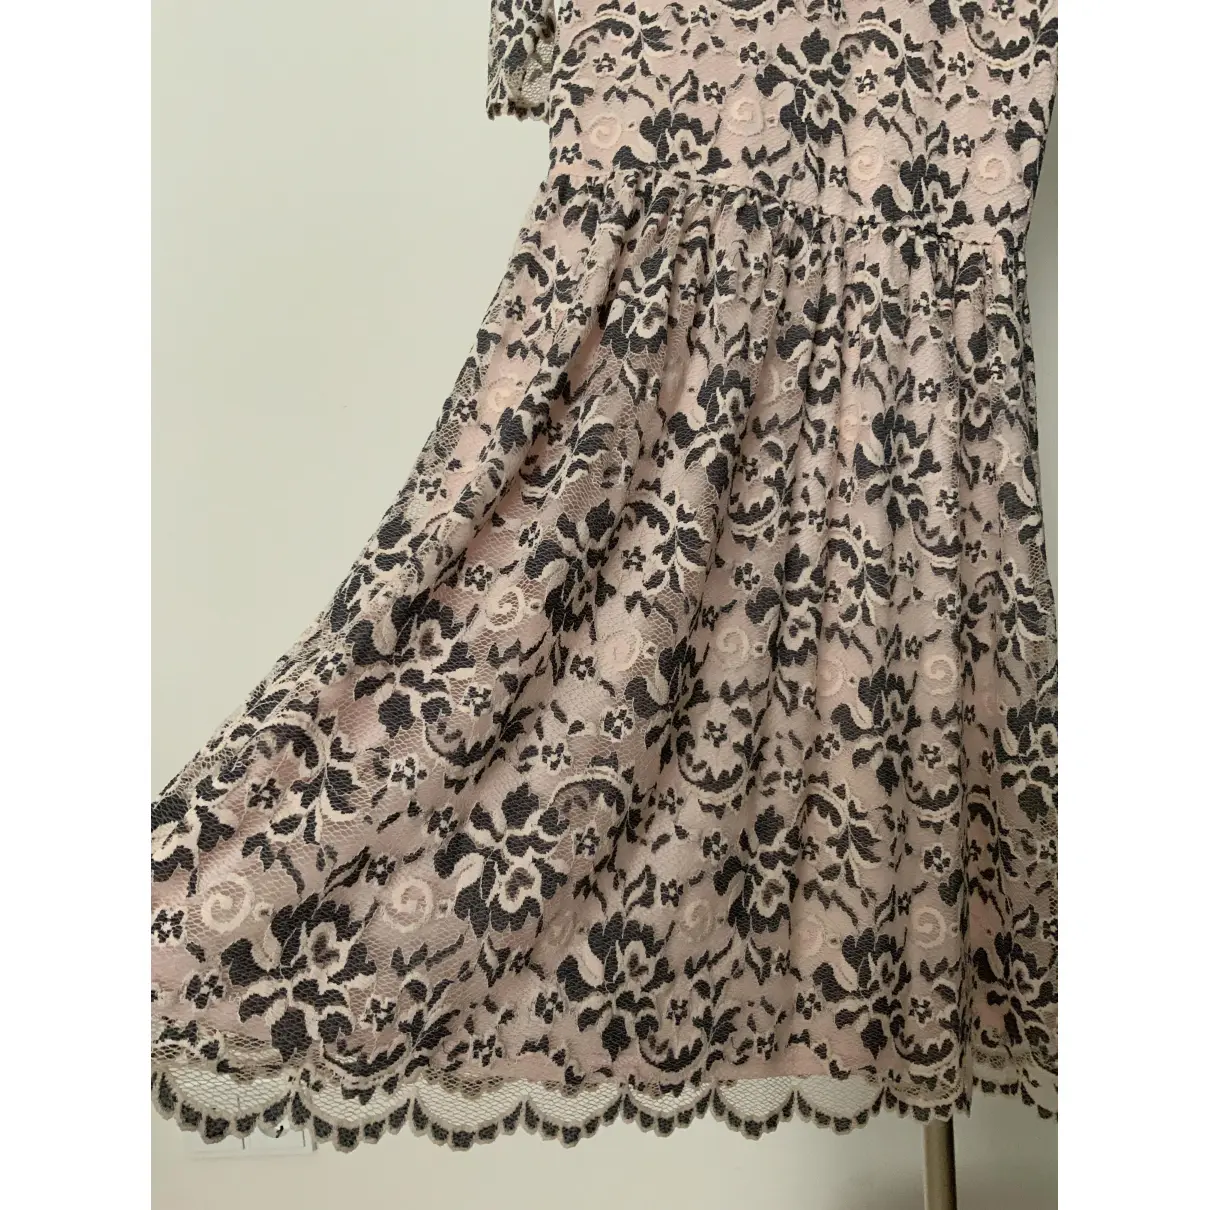 Lace mid-length dress Ganni